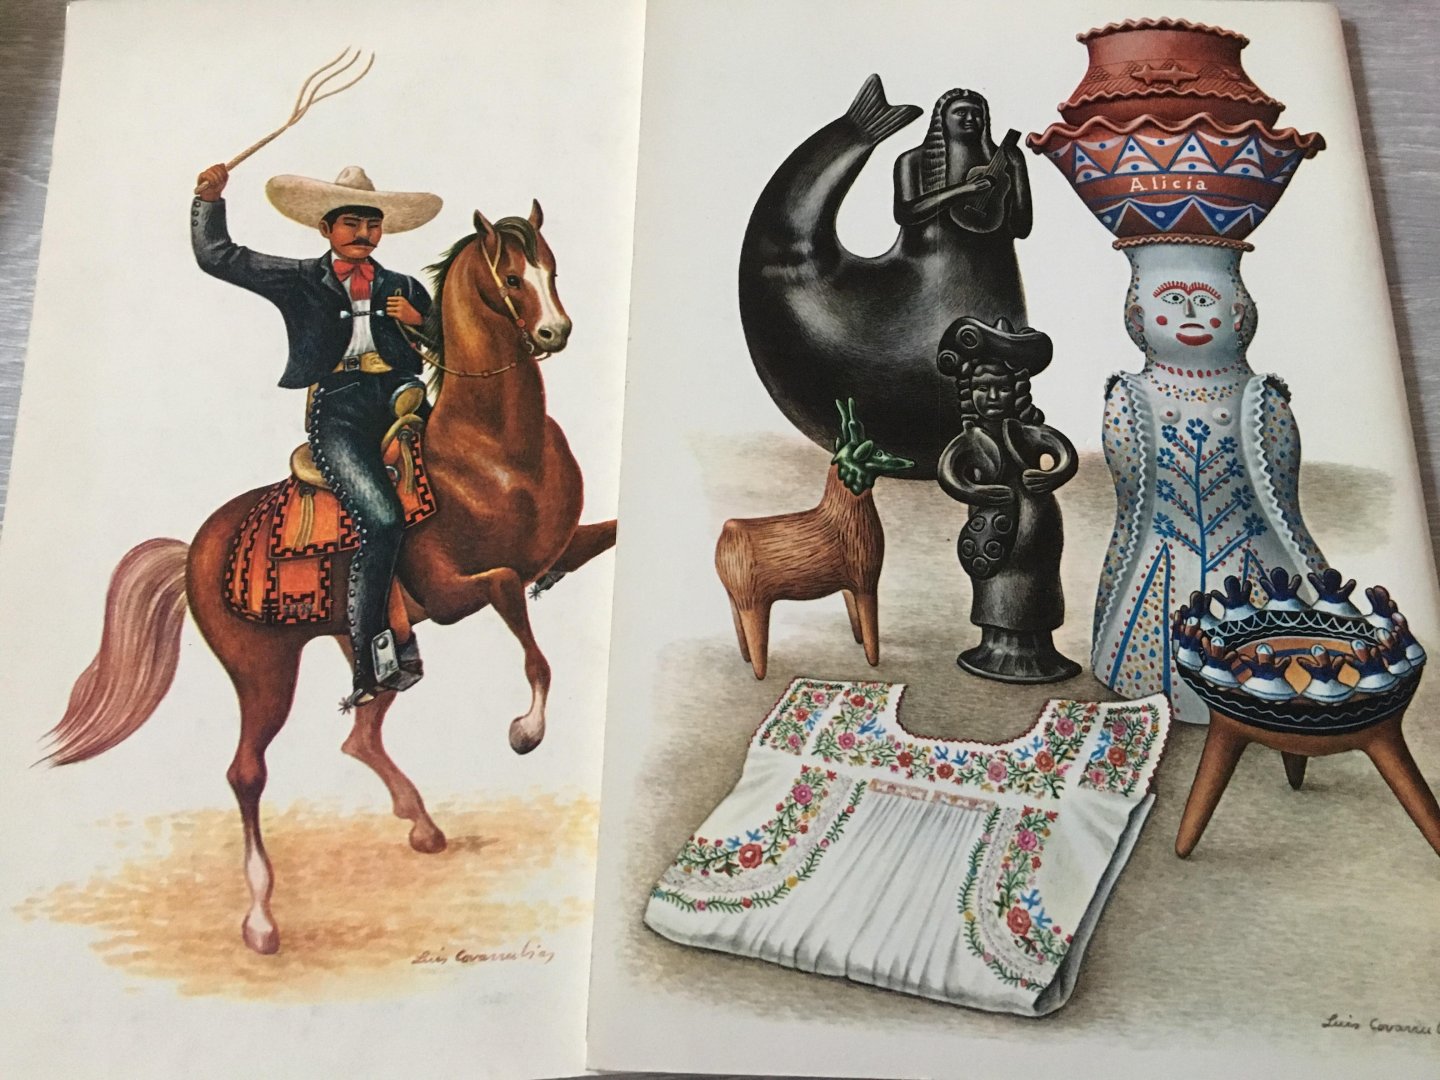 Luis Cavareubias - Two Books; Mexican native arts & crafts & Maxican Native costumes